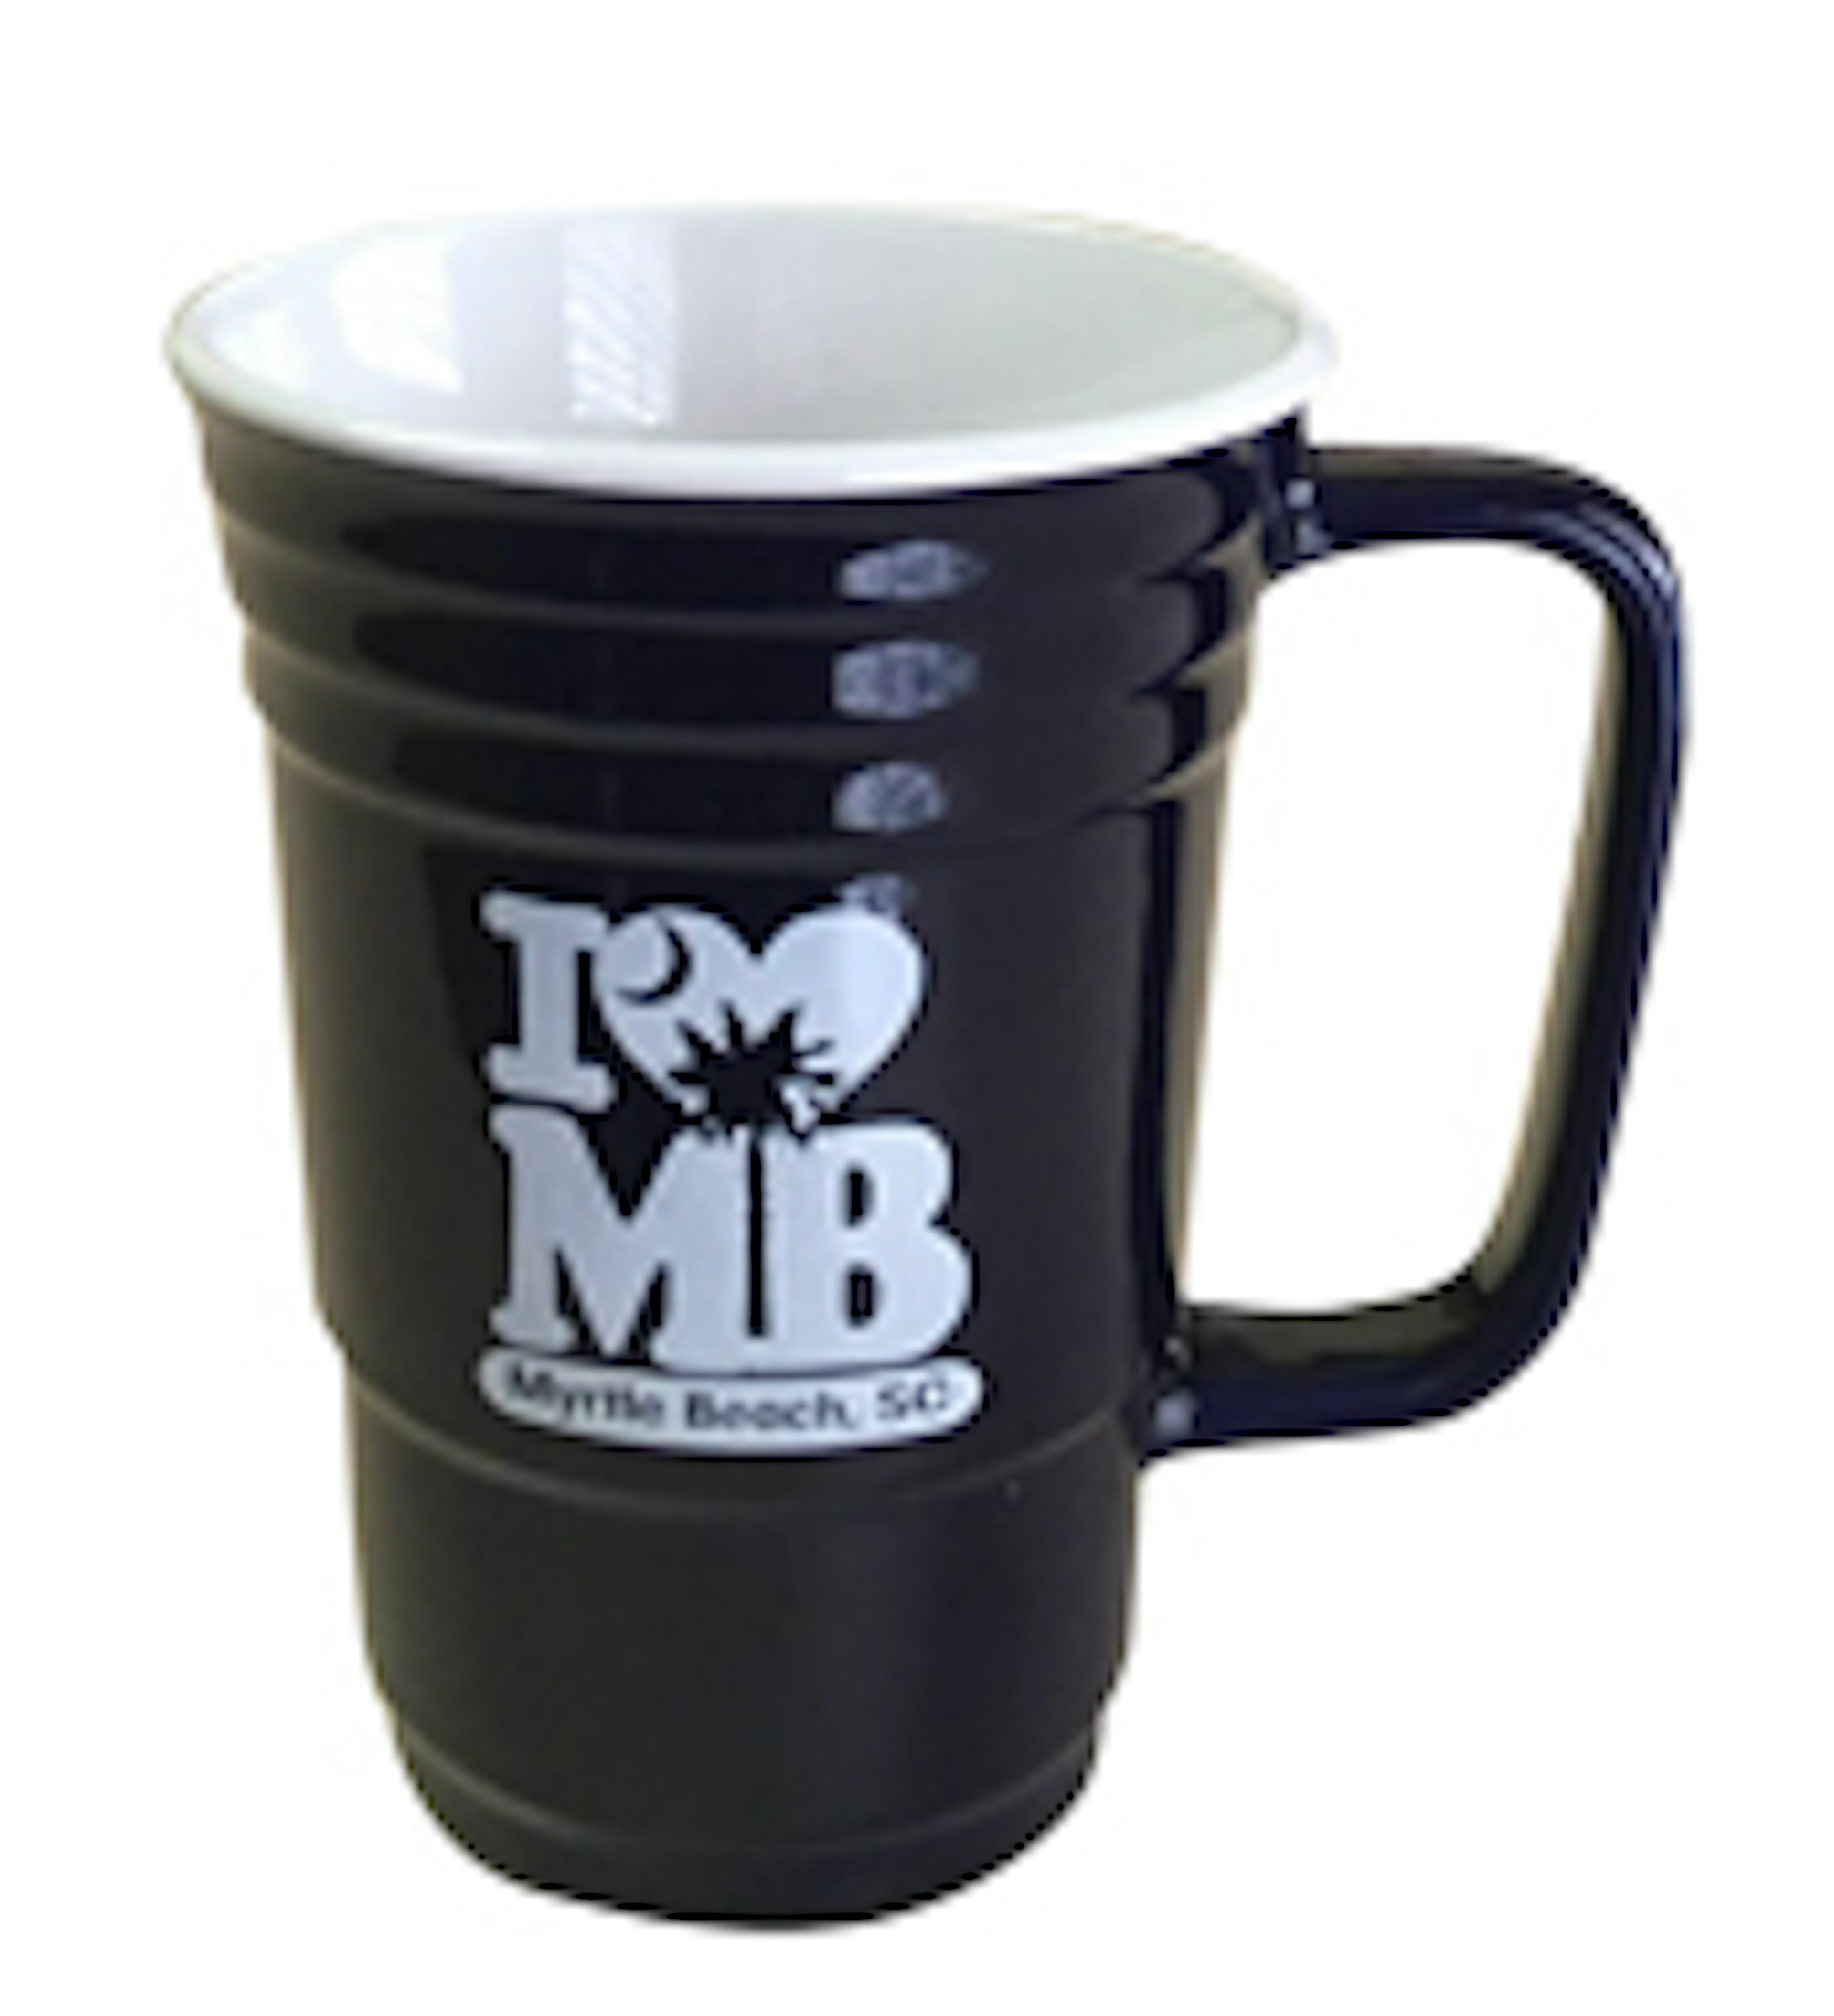 $2.49 Large Myrtle Beach Ceramic Mug